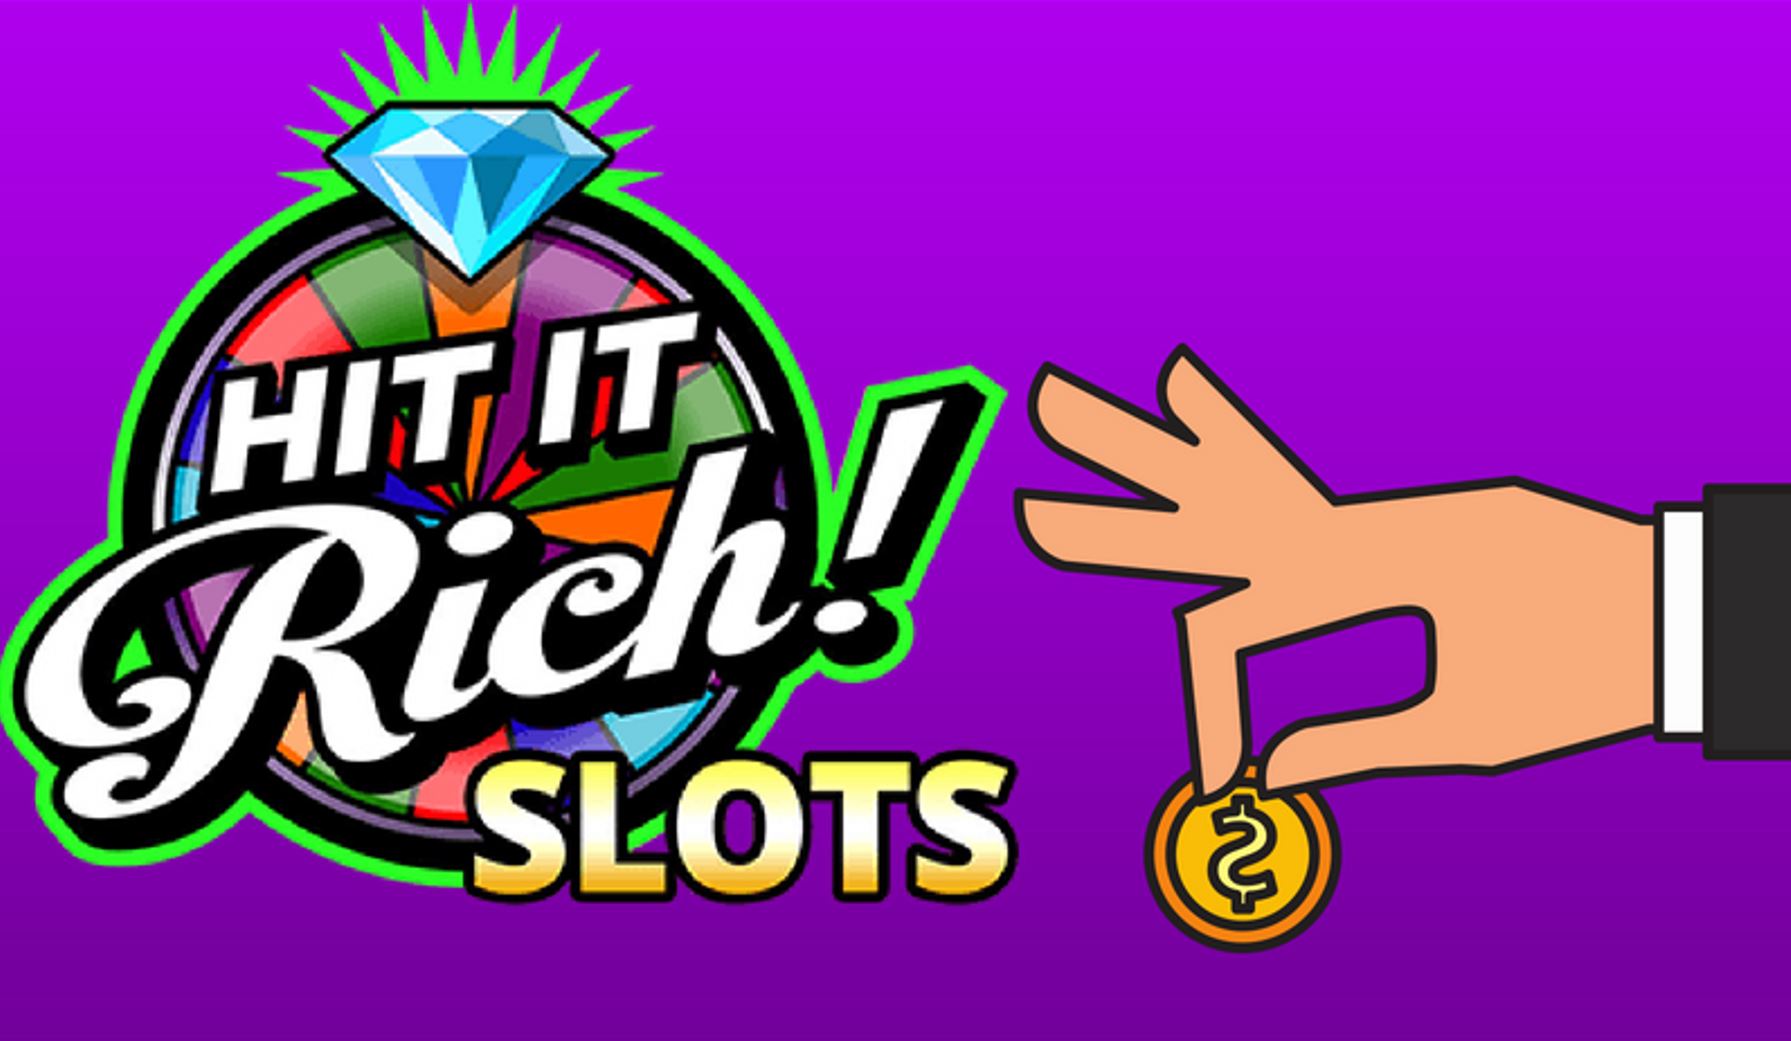 Hit it Rich Slots